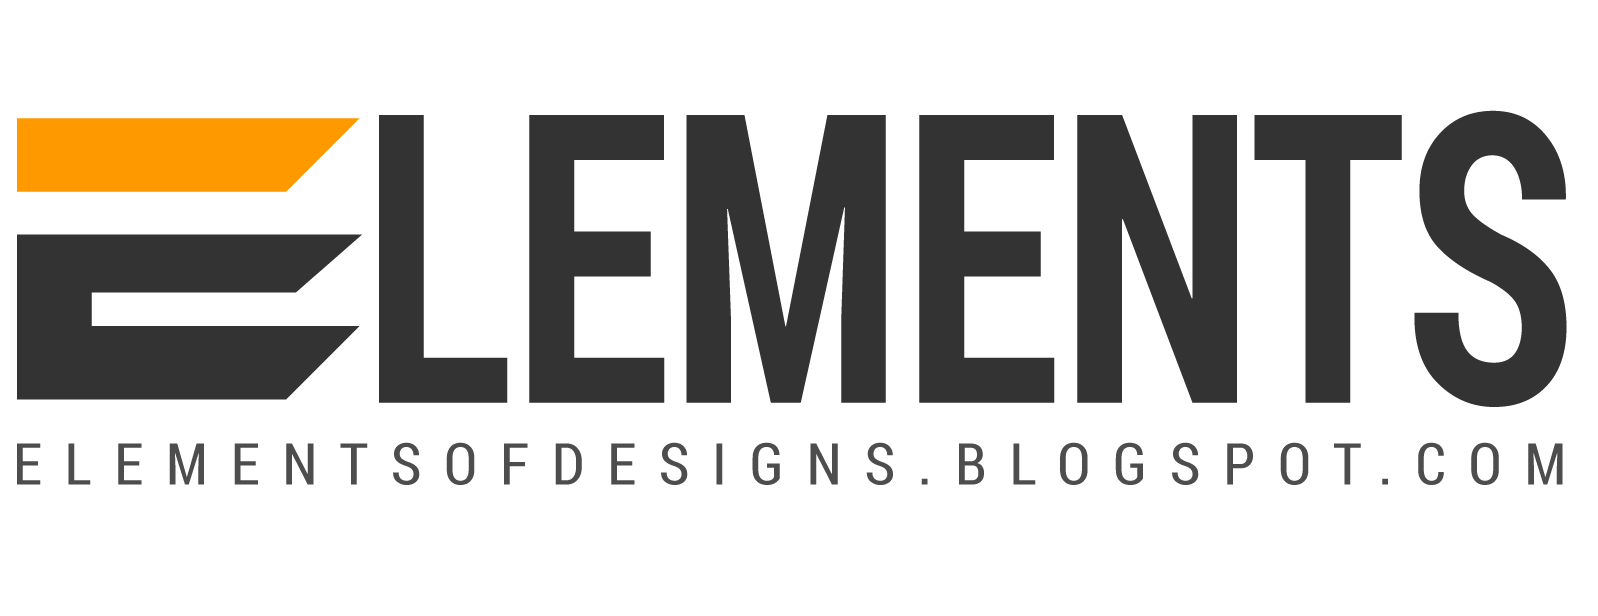 Element of Designs